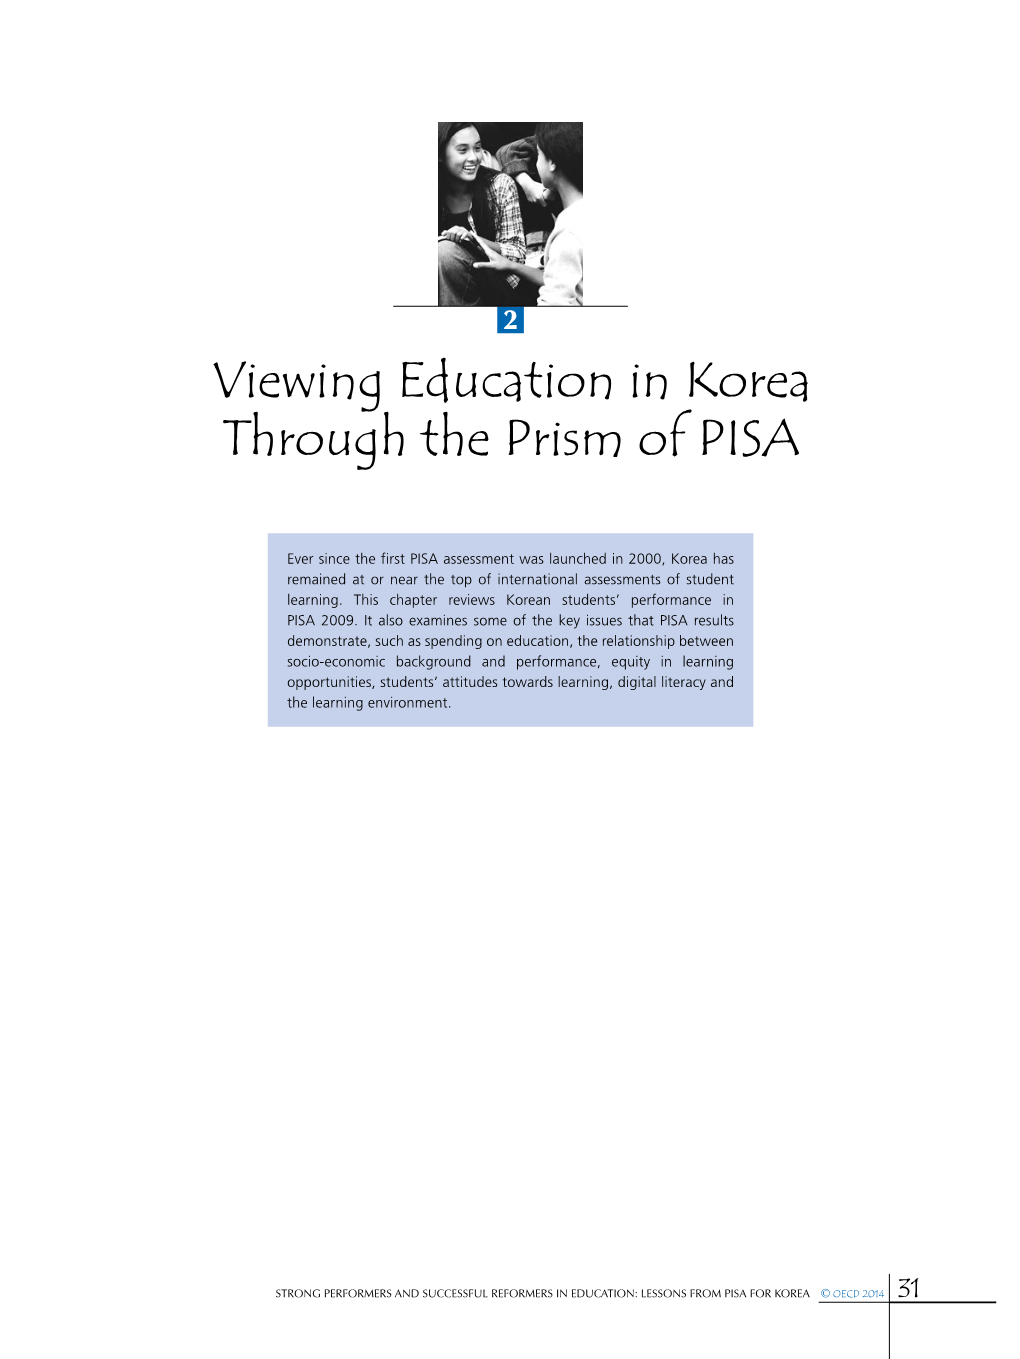 Viewing Education in Korea Through the Prism of PISA